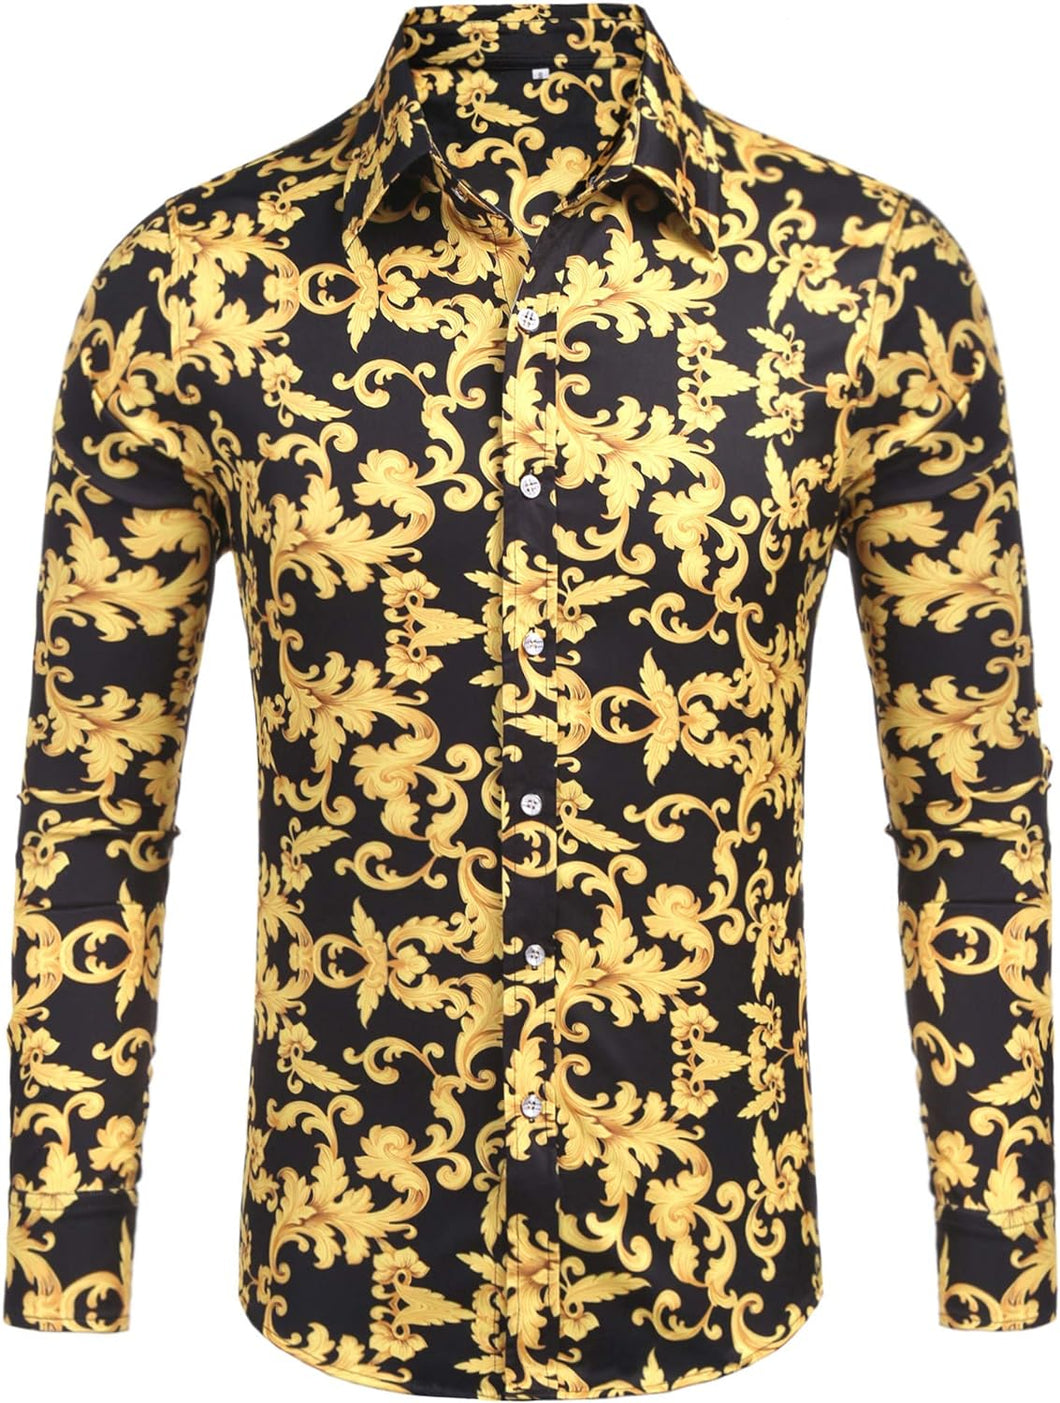 Men's Luxury Black/Gold Print Button Down Long Sleeve Shirt